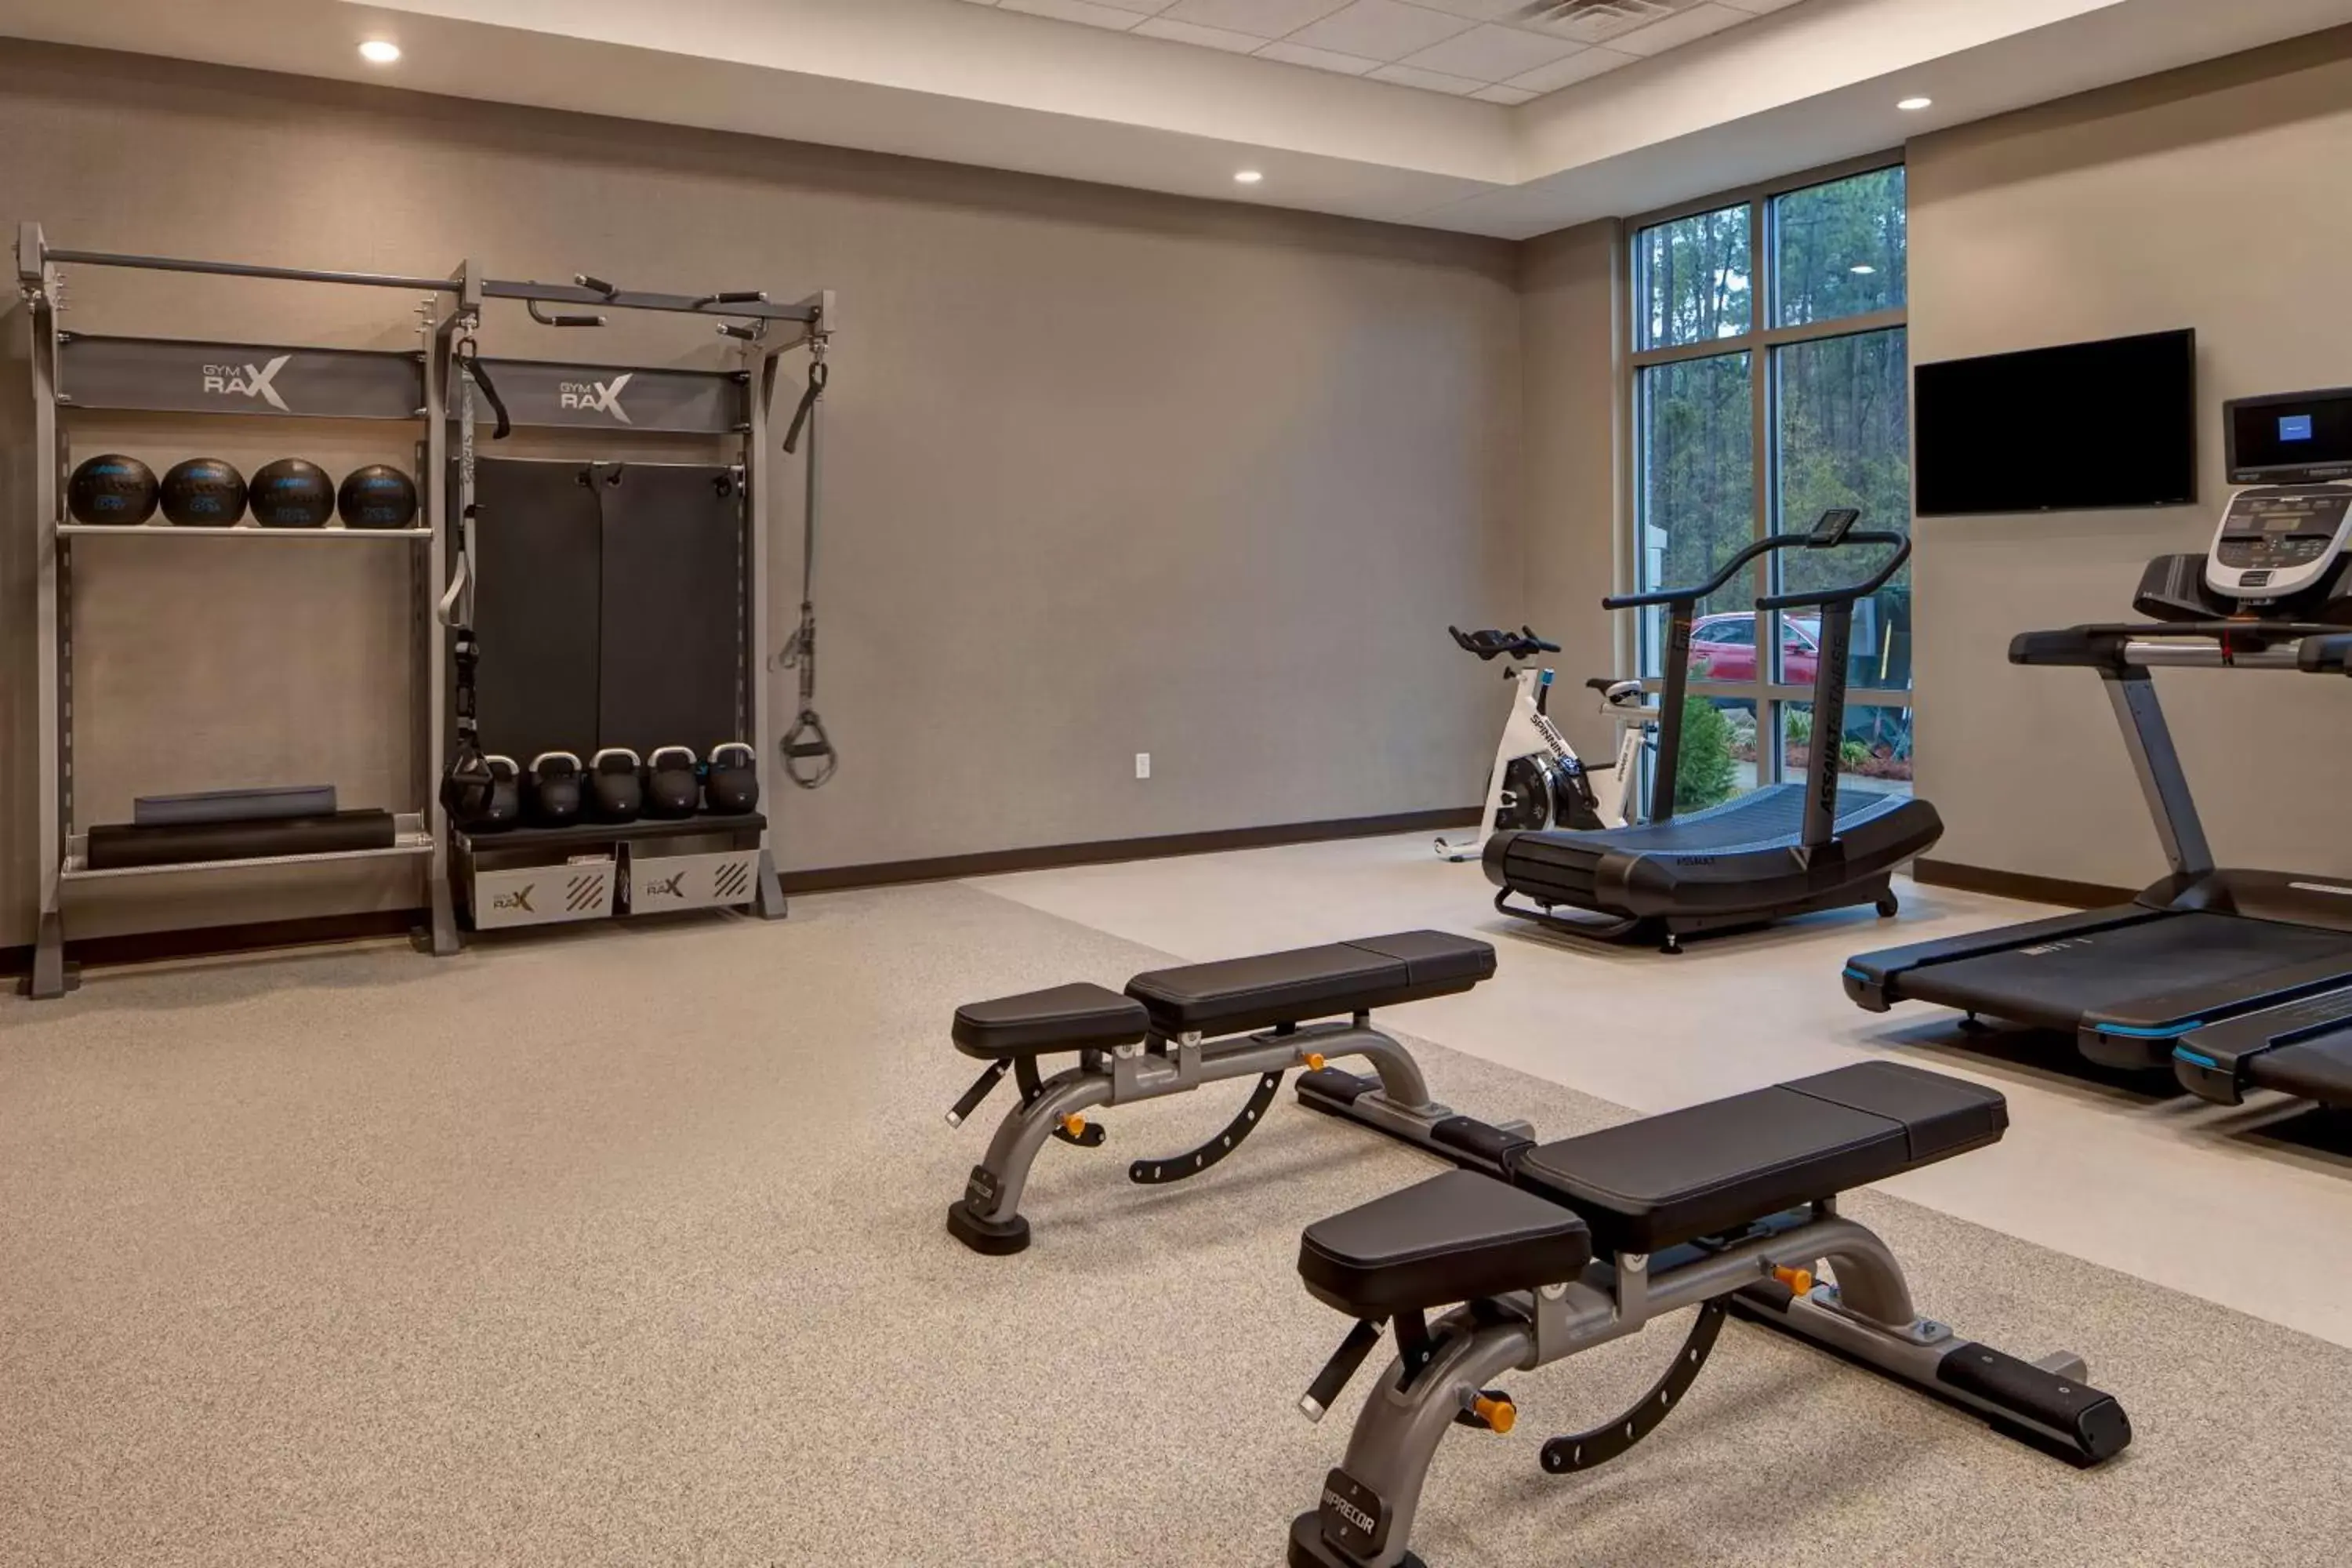 Fitness centre/facilities, Fitness Center/Facilities in Hilton Garden Inn Summerville, Sc